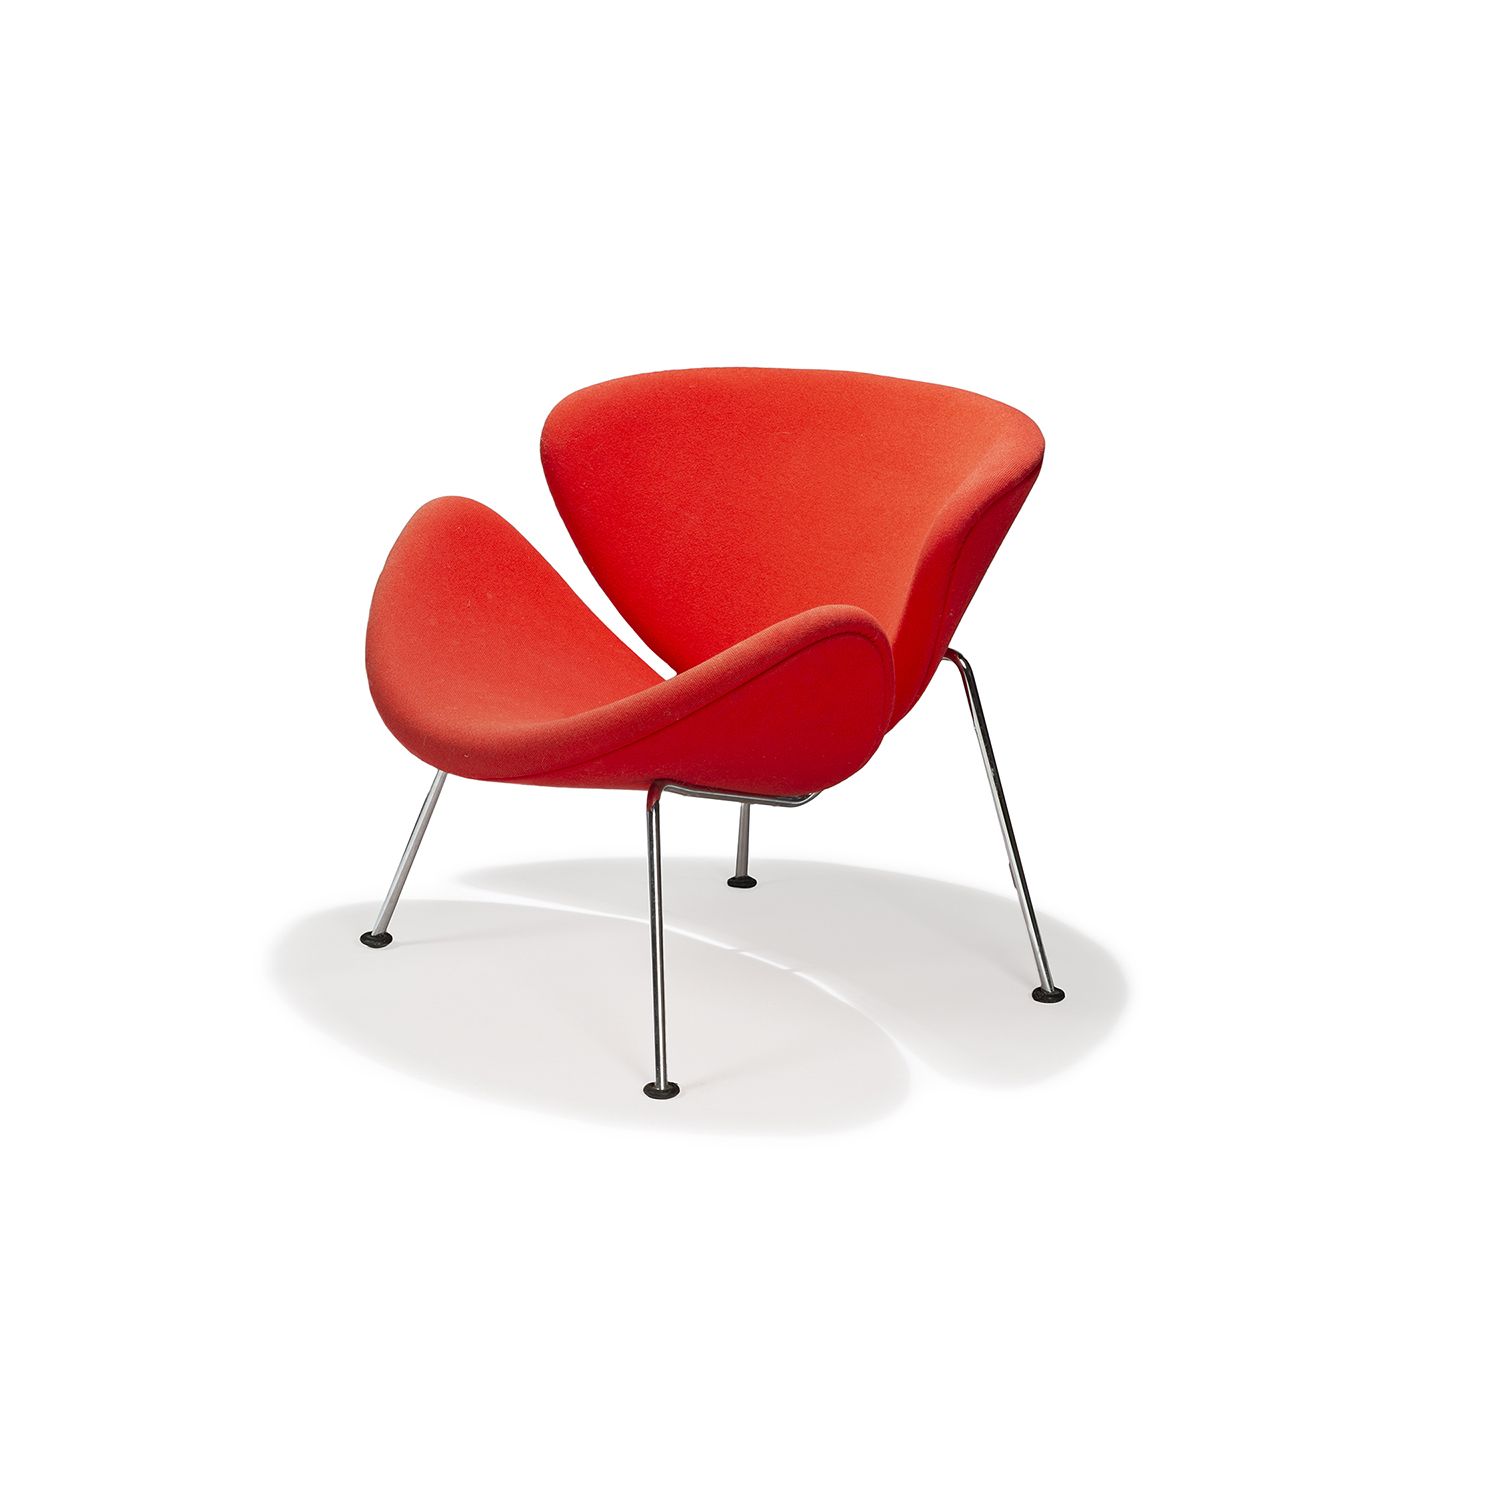 Null 皮埃尔-保林(1927-2009)

一把 "F437 "或 "橙色切片 "扶手椅，设计于1960年，钢脚，热成型的木质结构分为两部分，红色羊毛织物。&hellip;